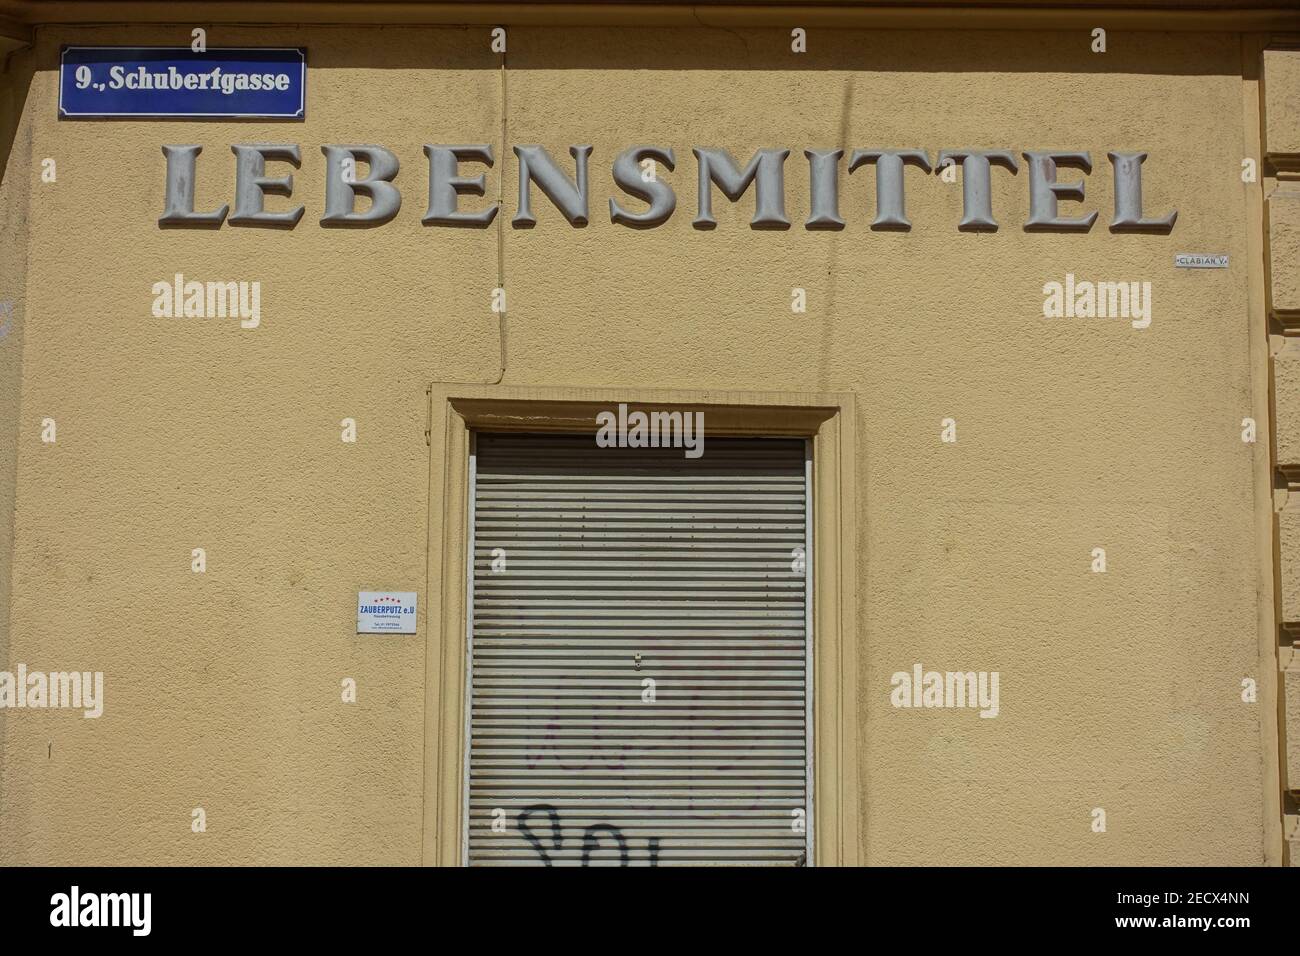 Viena, ehemaliges Lebensmittelgeschäft Schubertgasse Foto de stock